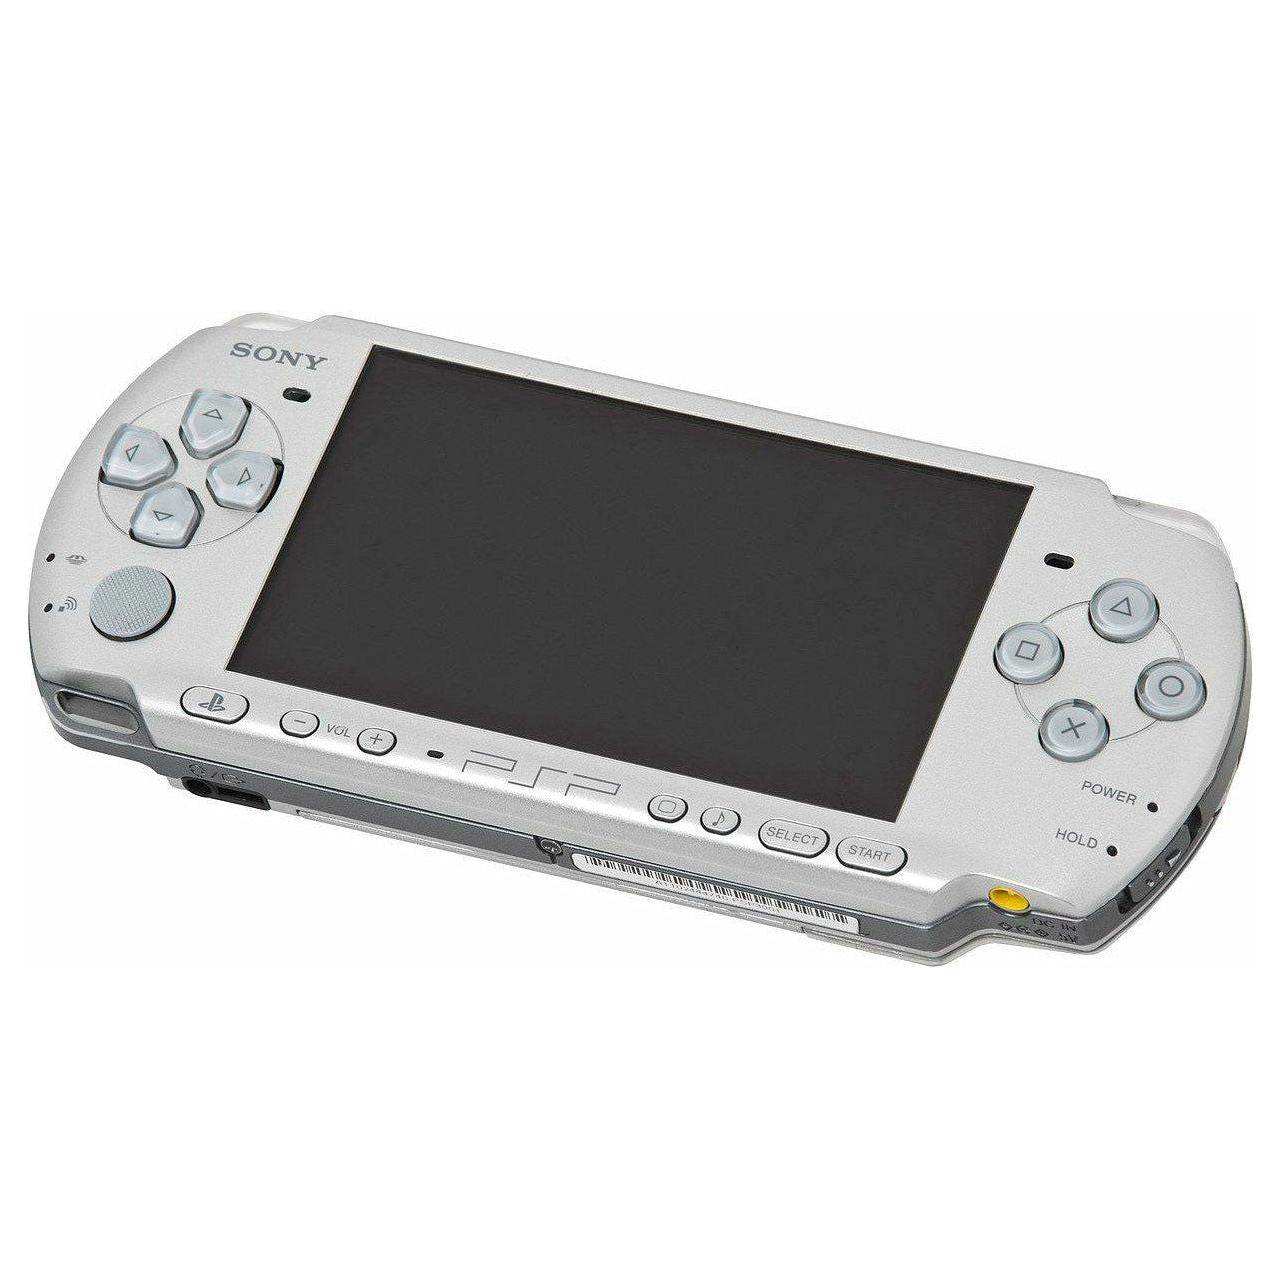 Système PSP - Modèle 2000 (Blanc)